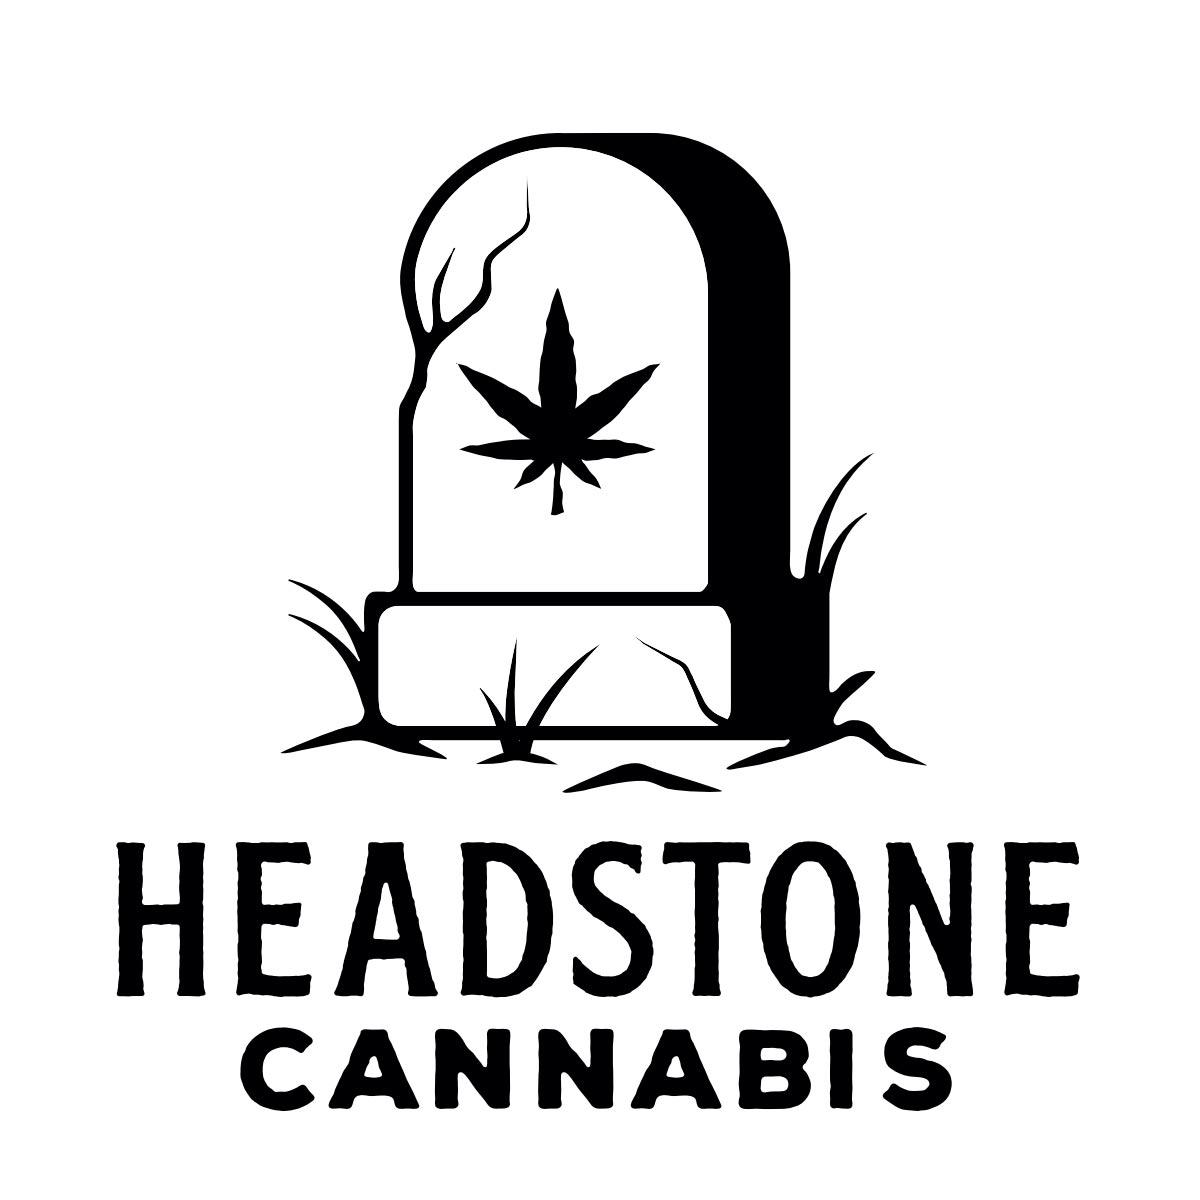 Headstone Cannabis